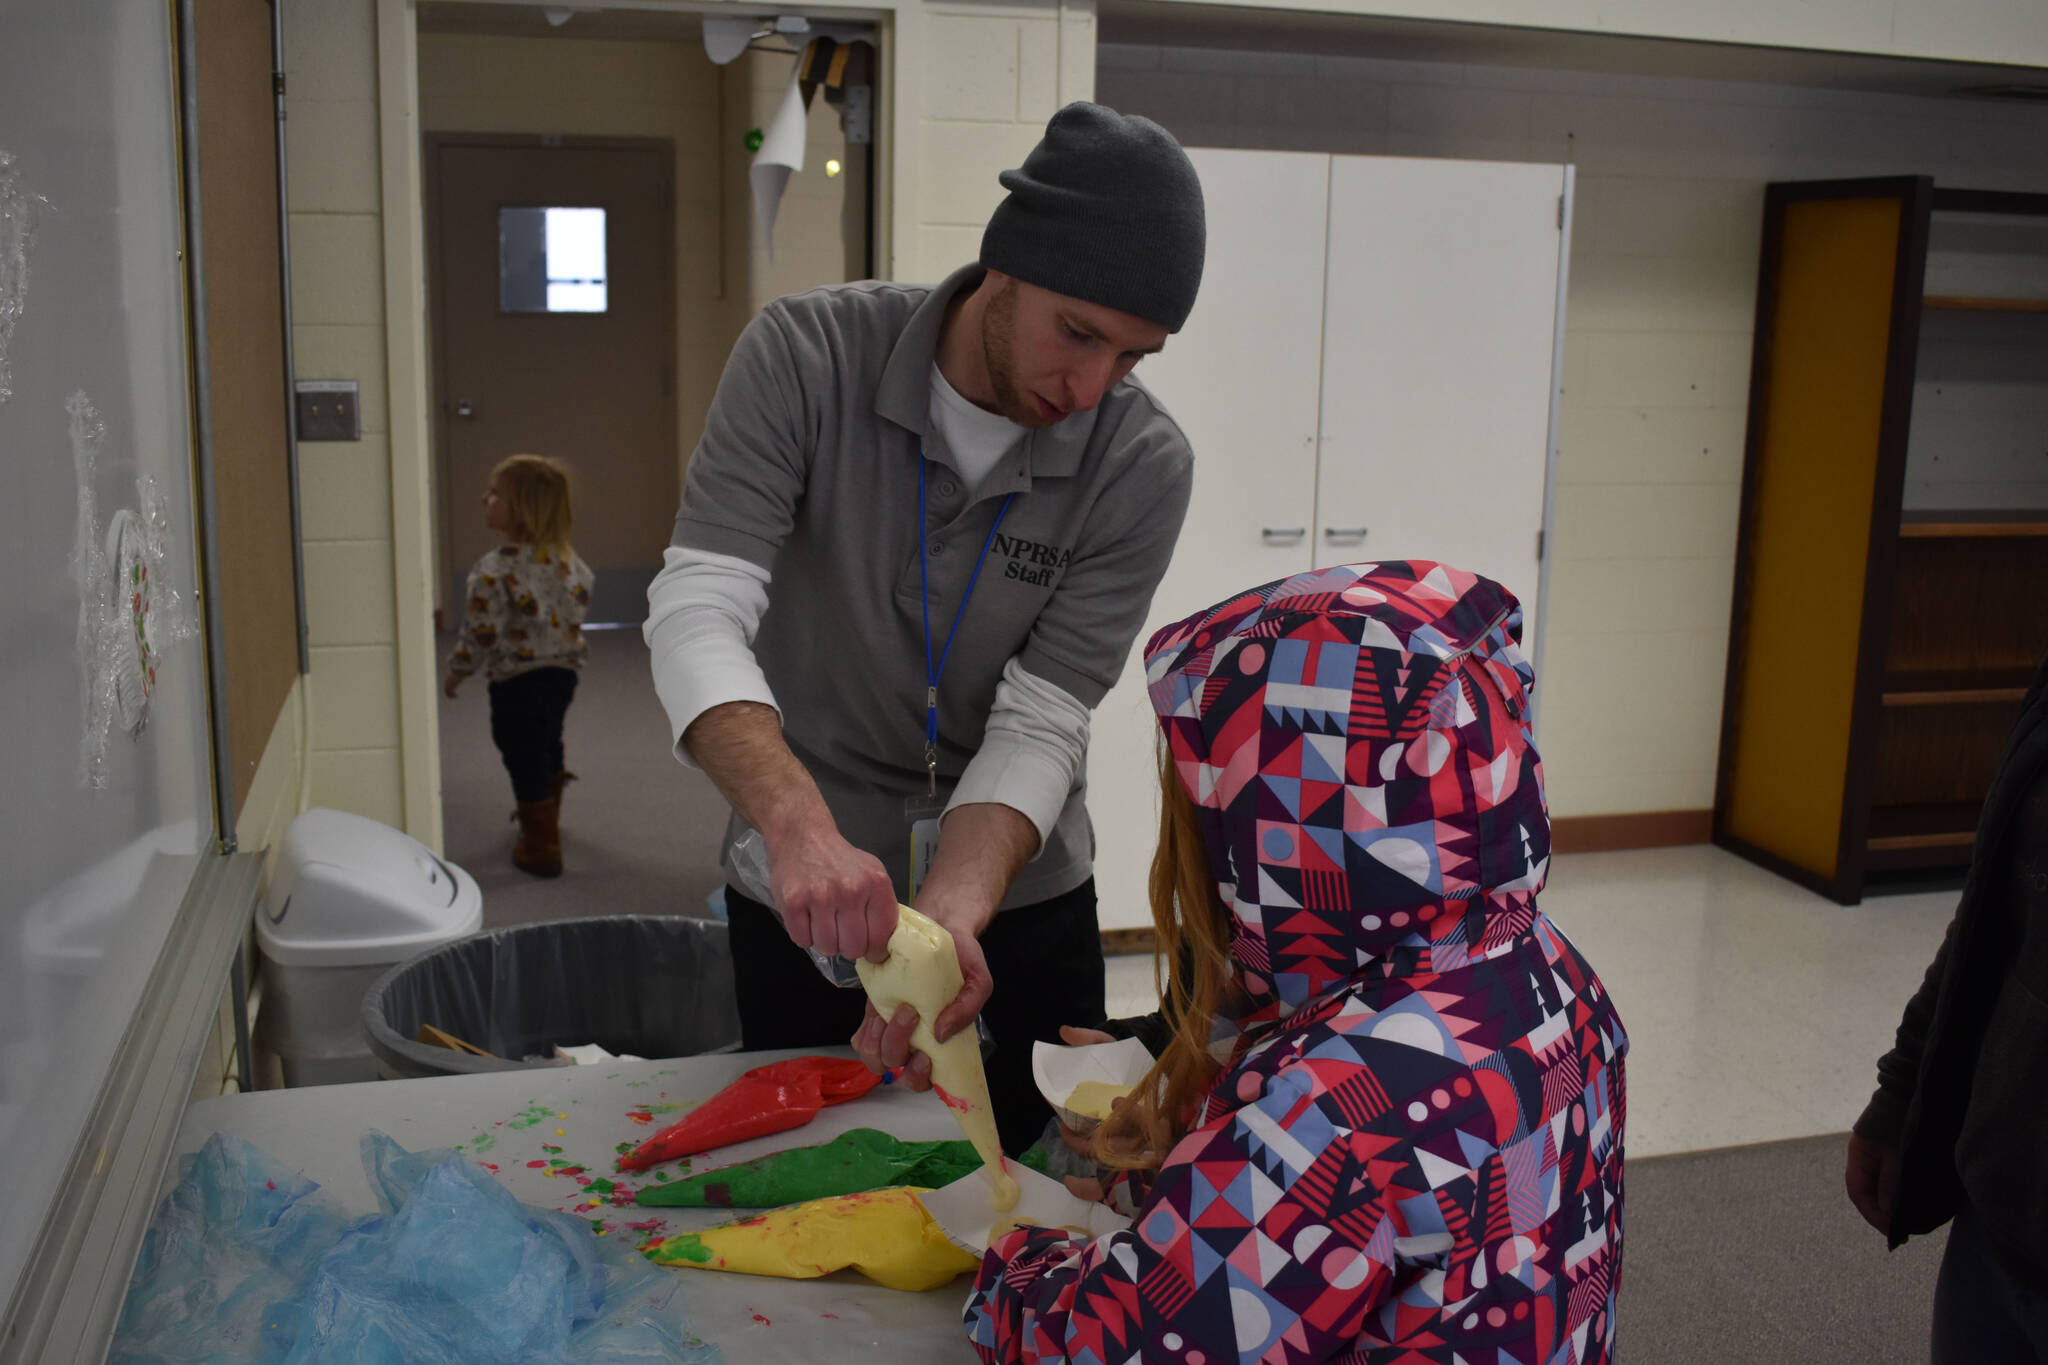 Children collect frosting for decorating Christmas cookies, part of Christmas Comes to Nikiski festivities on Saturday, Dec. 3, 2022, at Nikiski Community Recreation Center in Nikiski, Alaska. (Jake Dye/Peninsula Clarion)